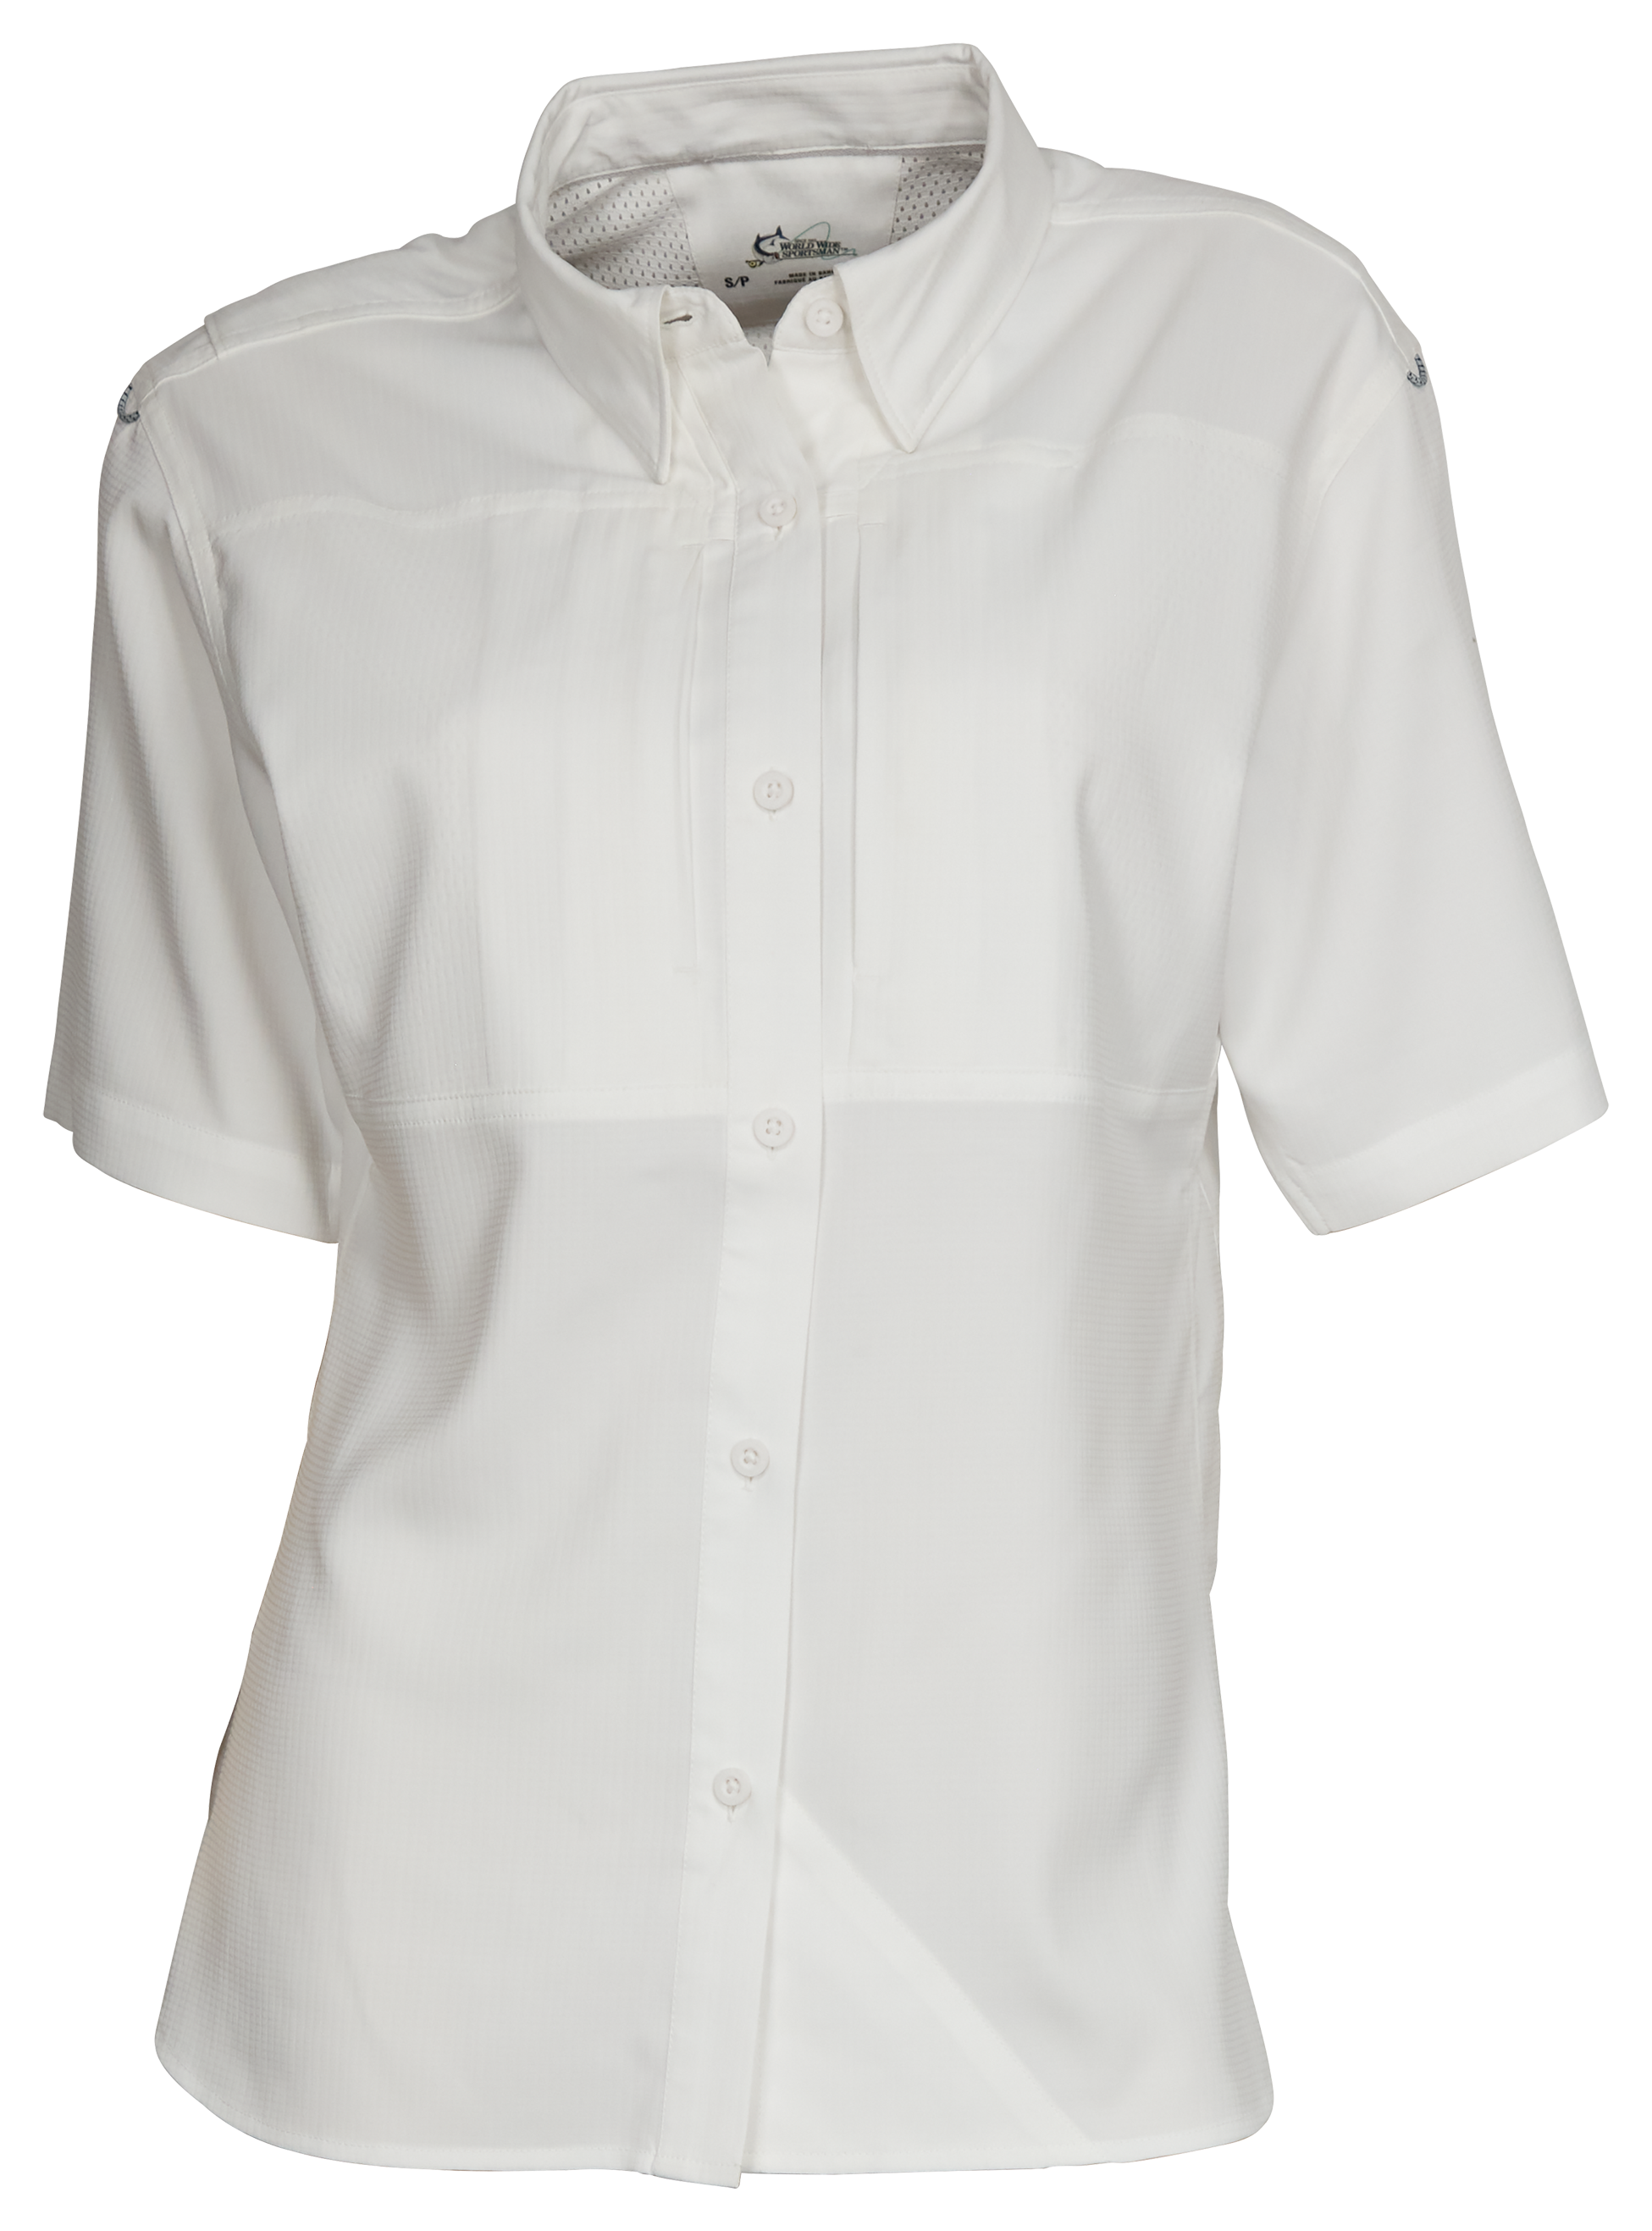 World Wide Sportsman Marina Short-Sleeve Shirt for Ladies - Bright White - XL